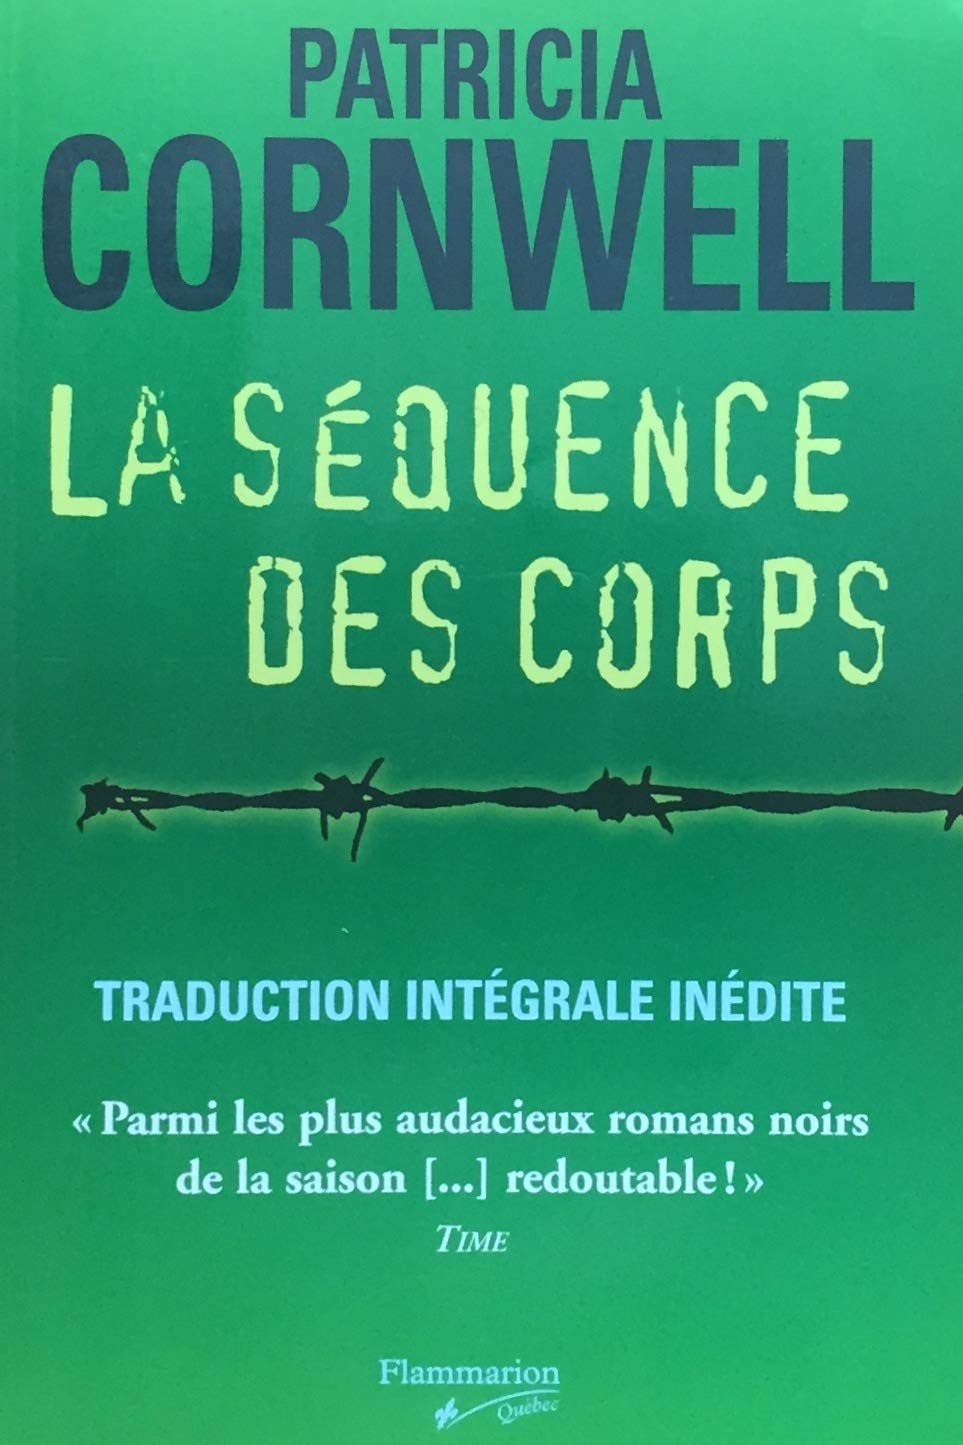 Livre ISBN 2890773132 La séquence des corps (Patricia Cornwell)